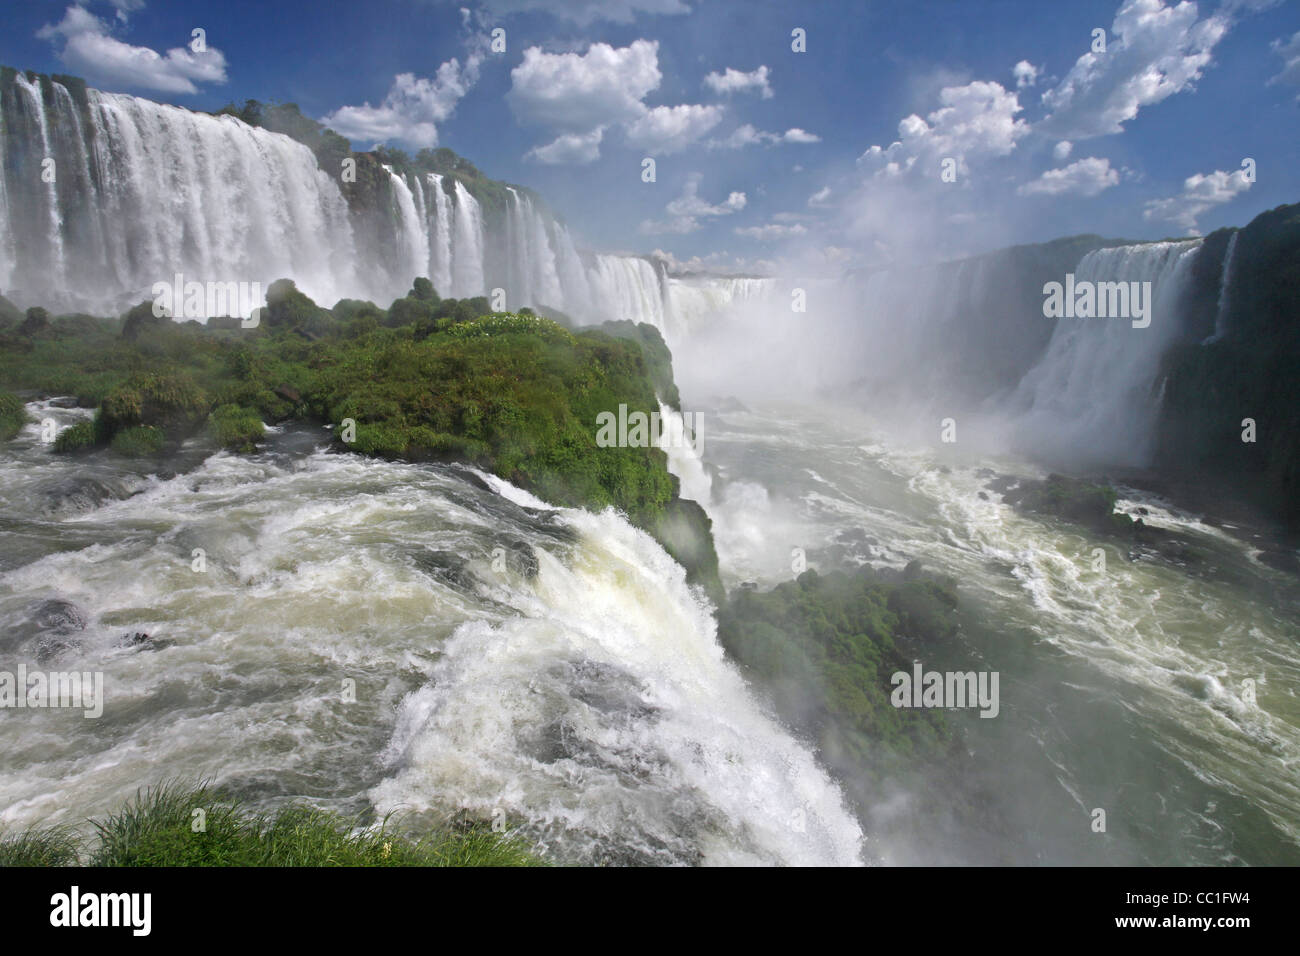 Iguazu Falls / Iguassu Falls / Iguaçu Falls on the border of Brazil and Argentina Stock Photo